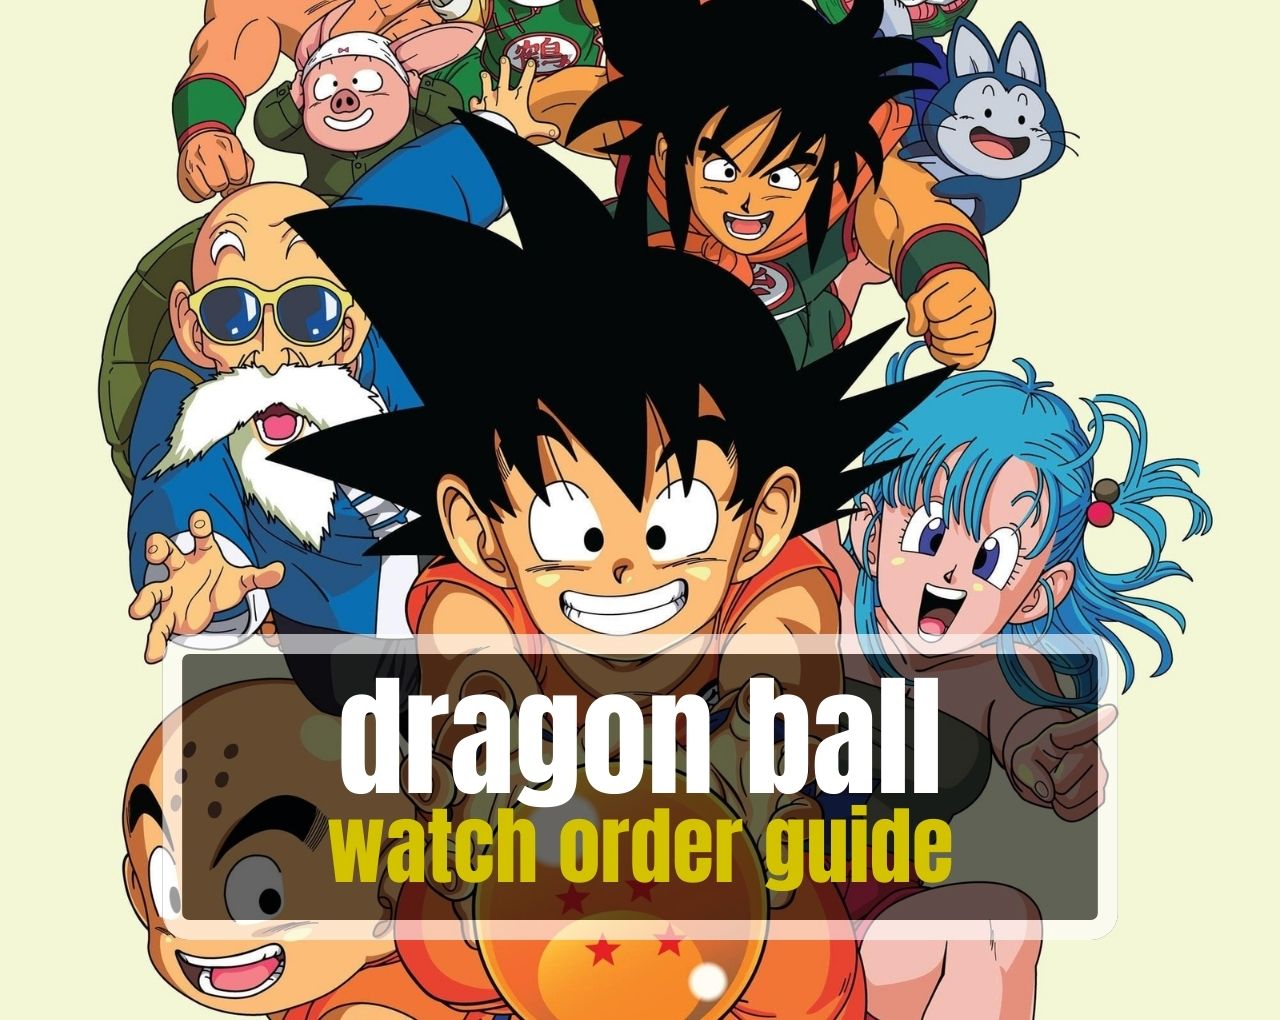 Dragon Ball watch order guide